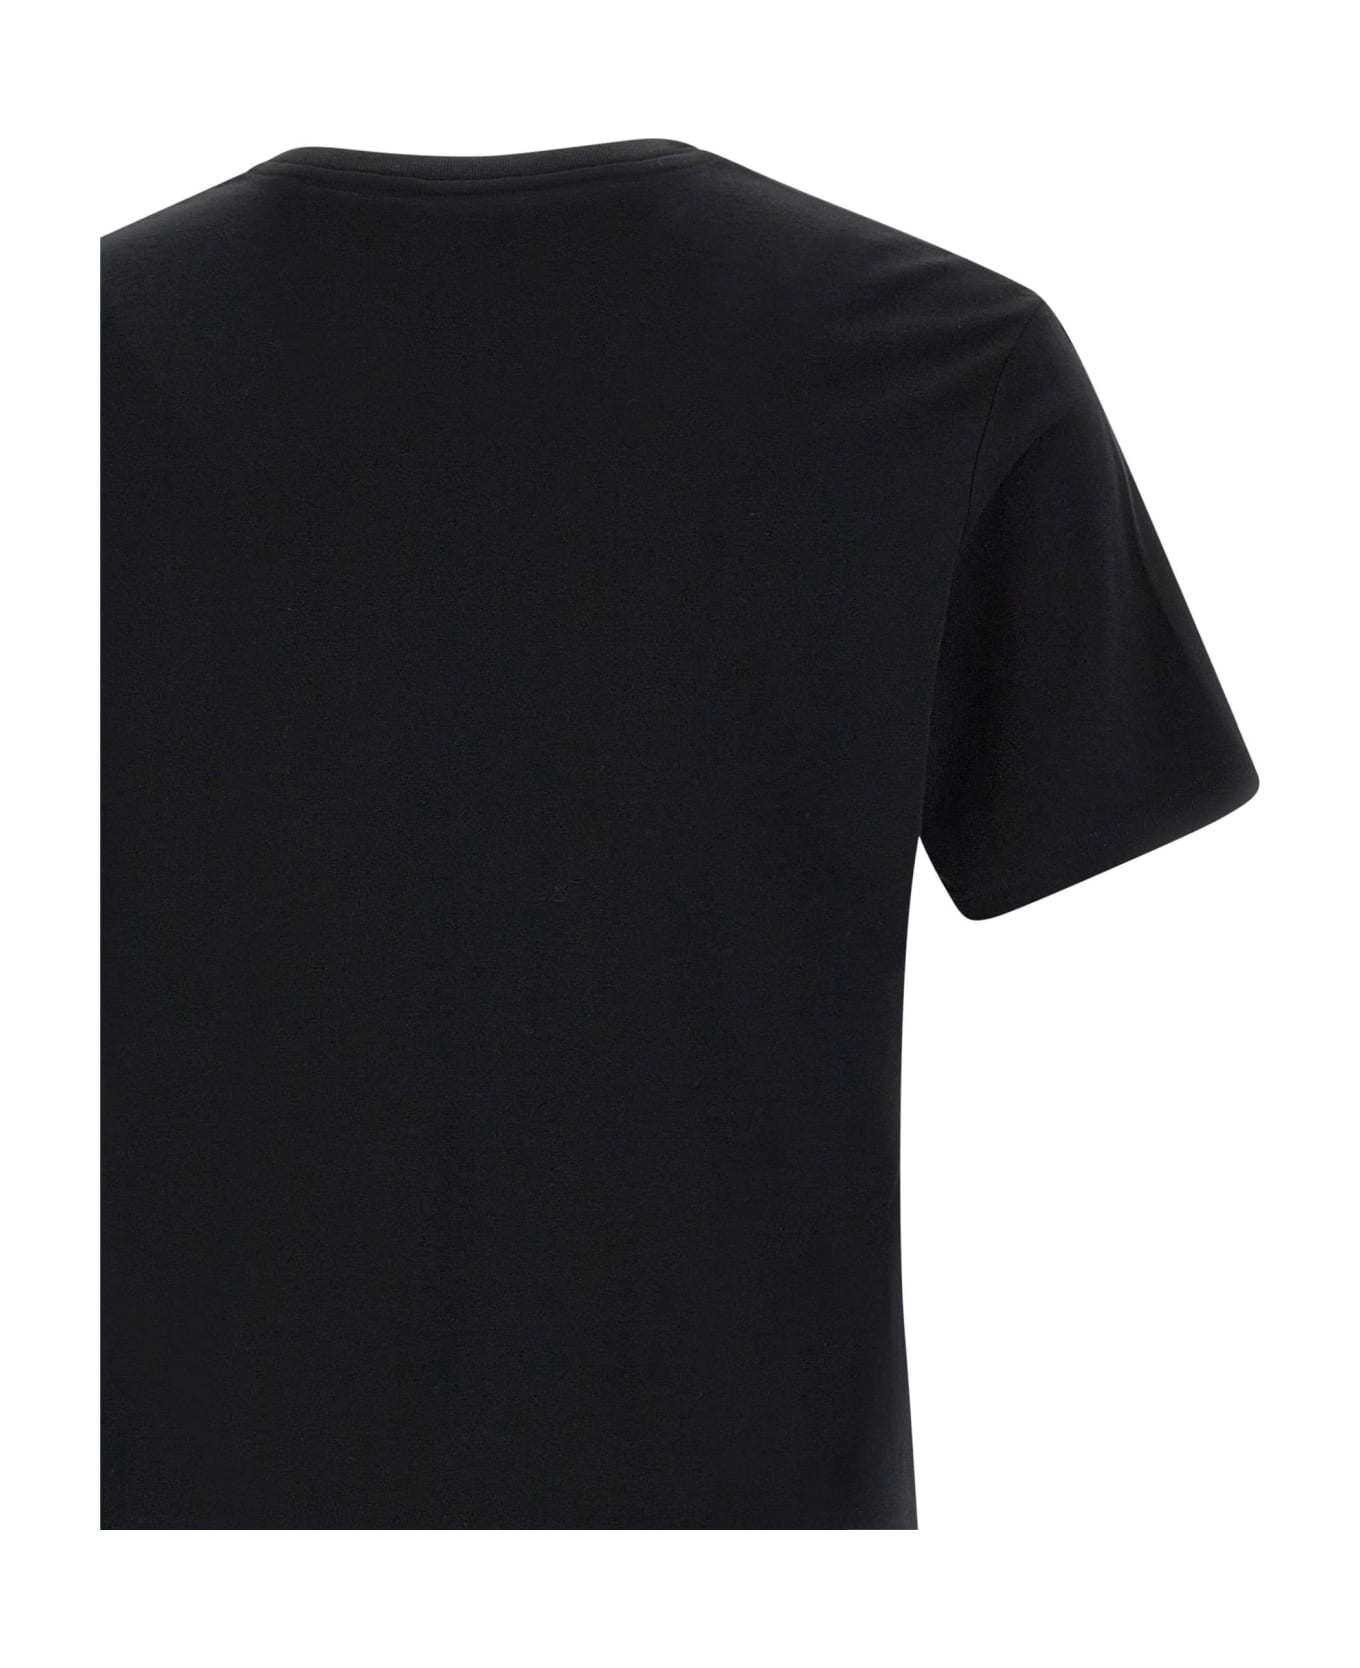 Polo Ralph Lauren "core Replen" Cotton T-shirt - BLACK